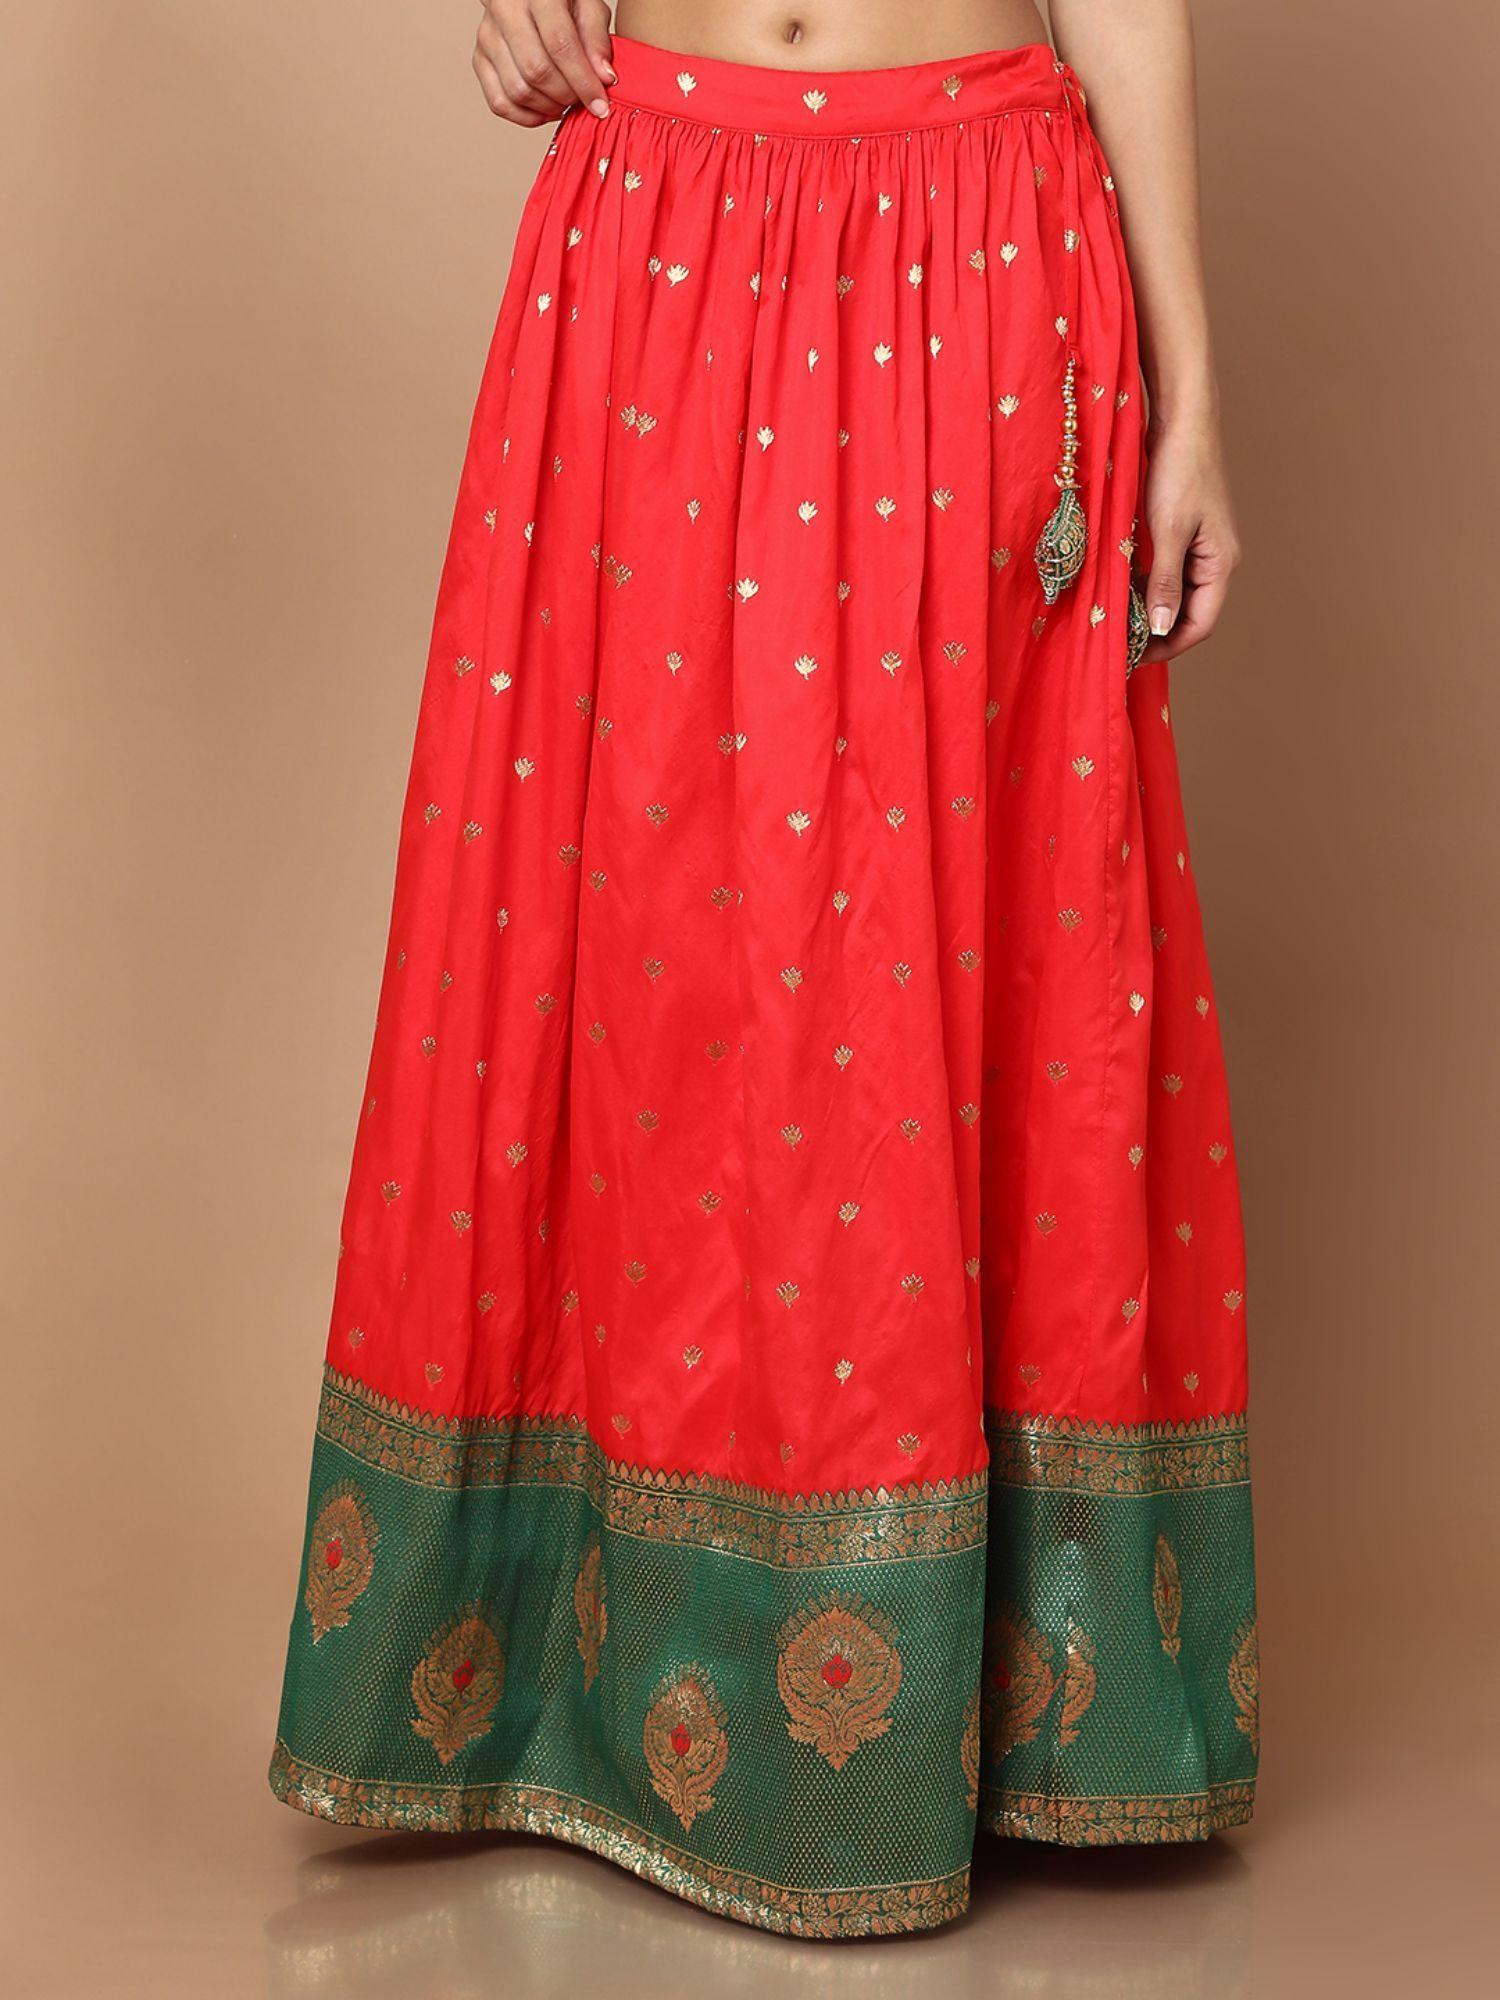 women red brocade ethnic skirt